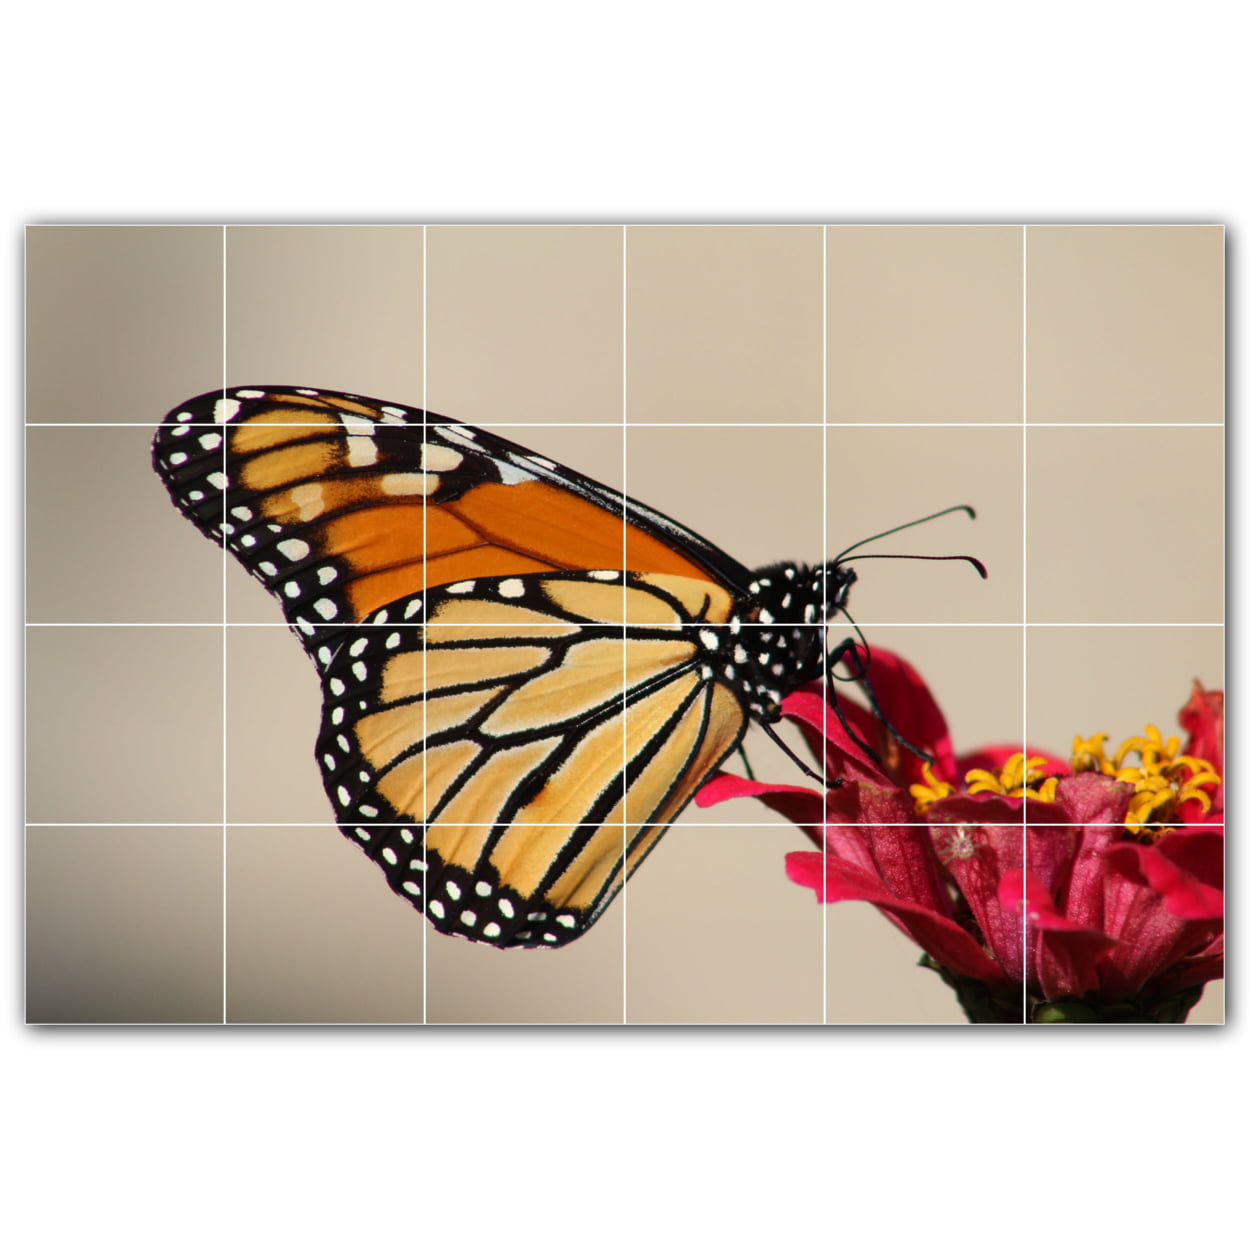 rose butterflies birds Tile Mural Kitchen Bathroom Backsplash Marble Ceramic 